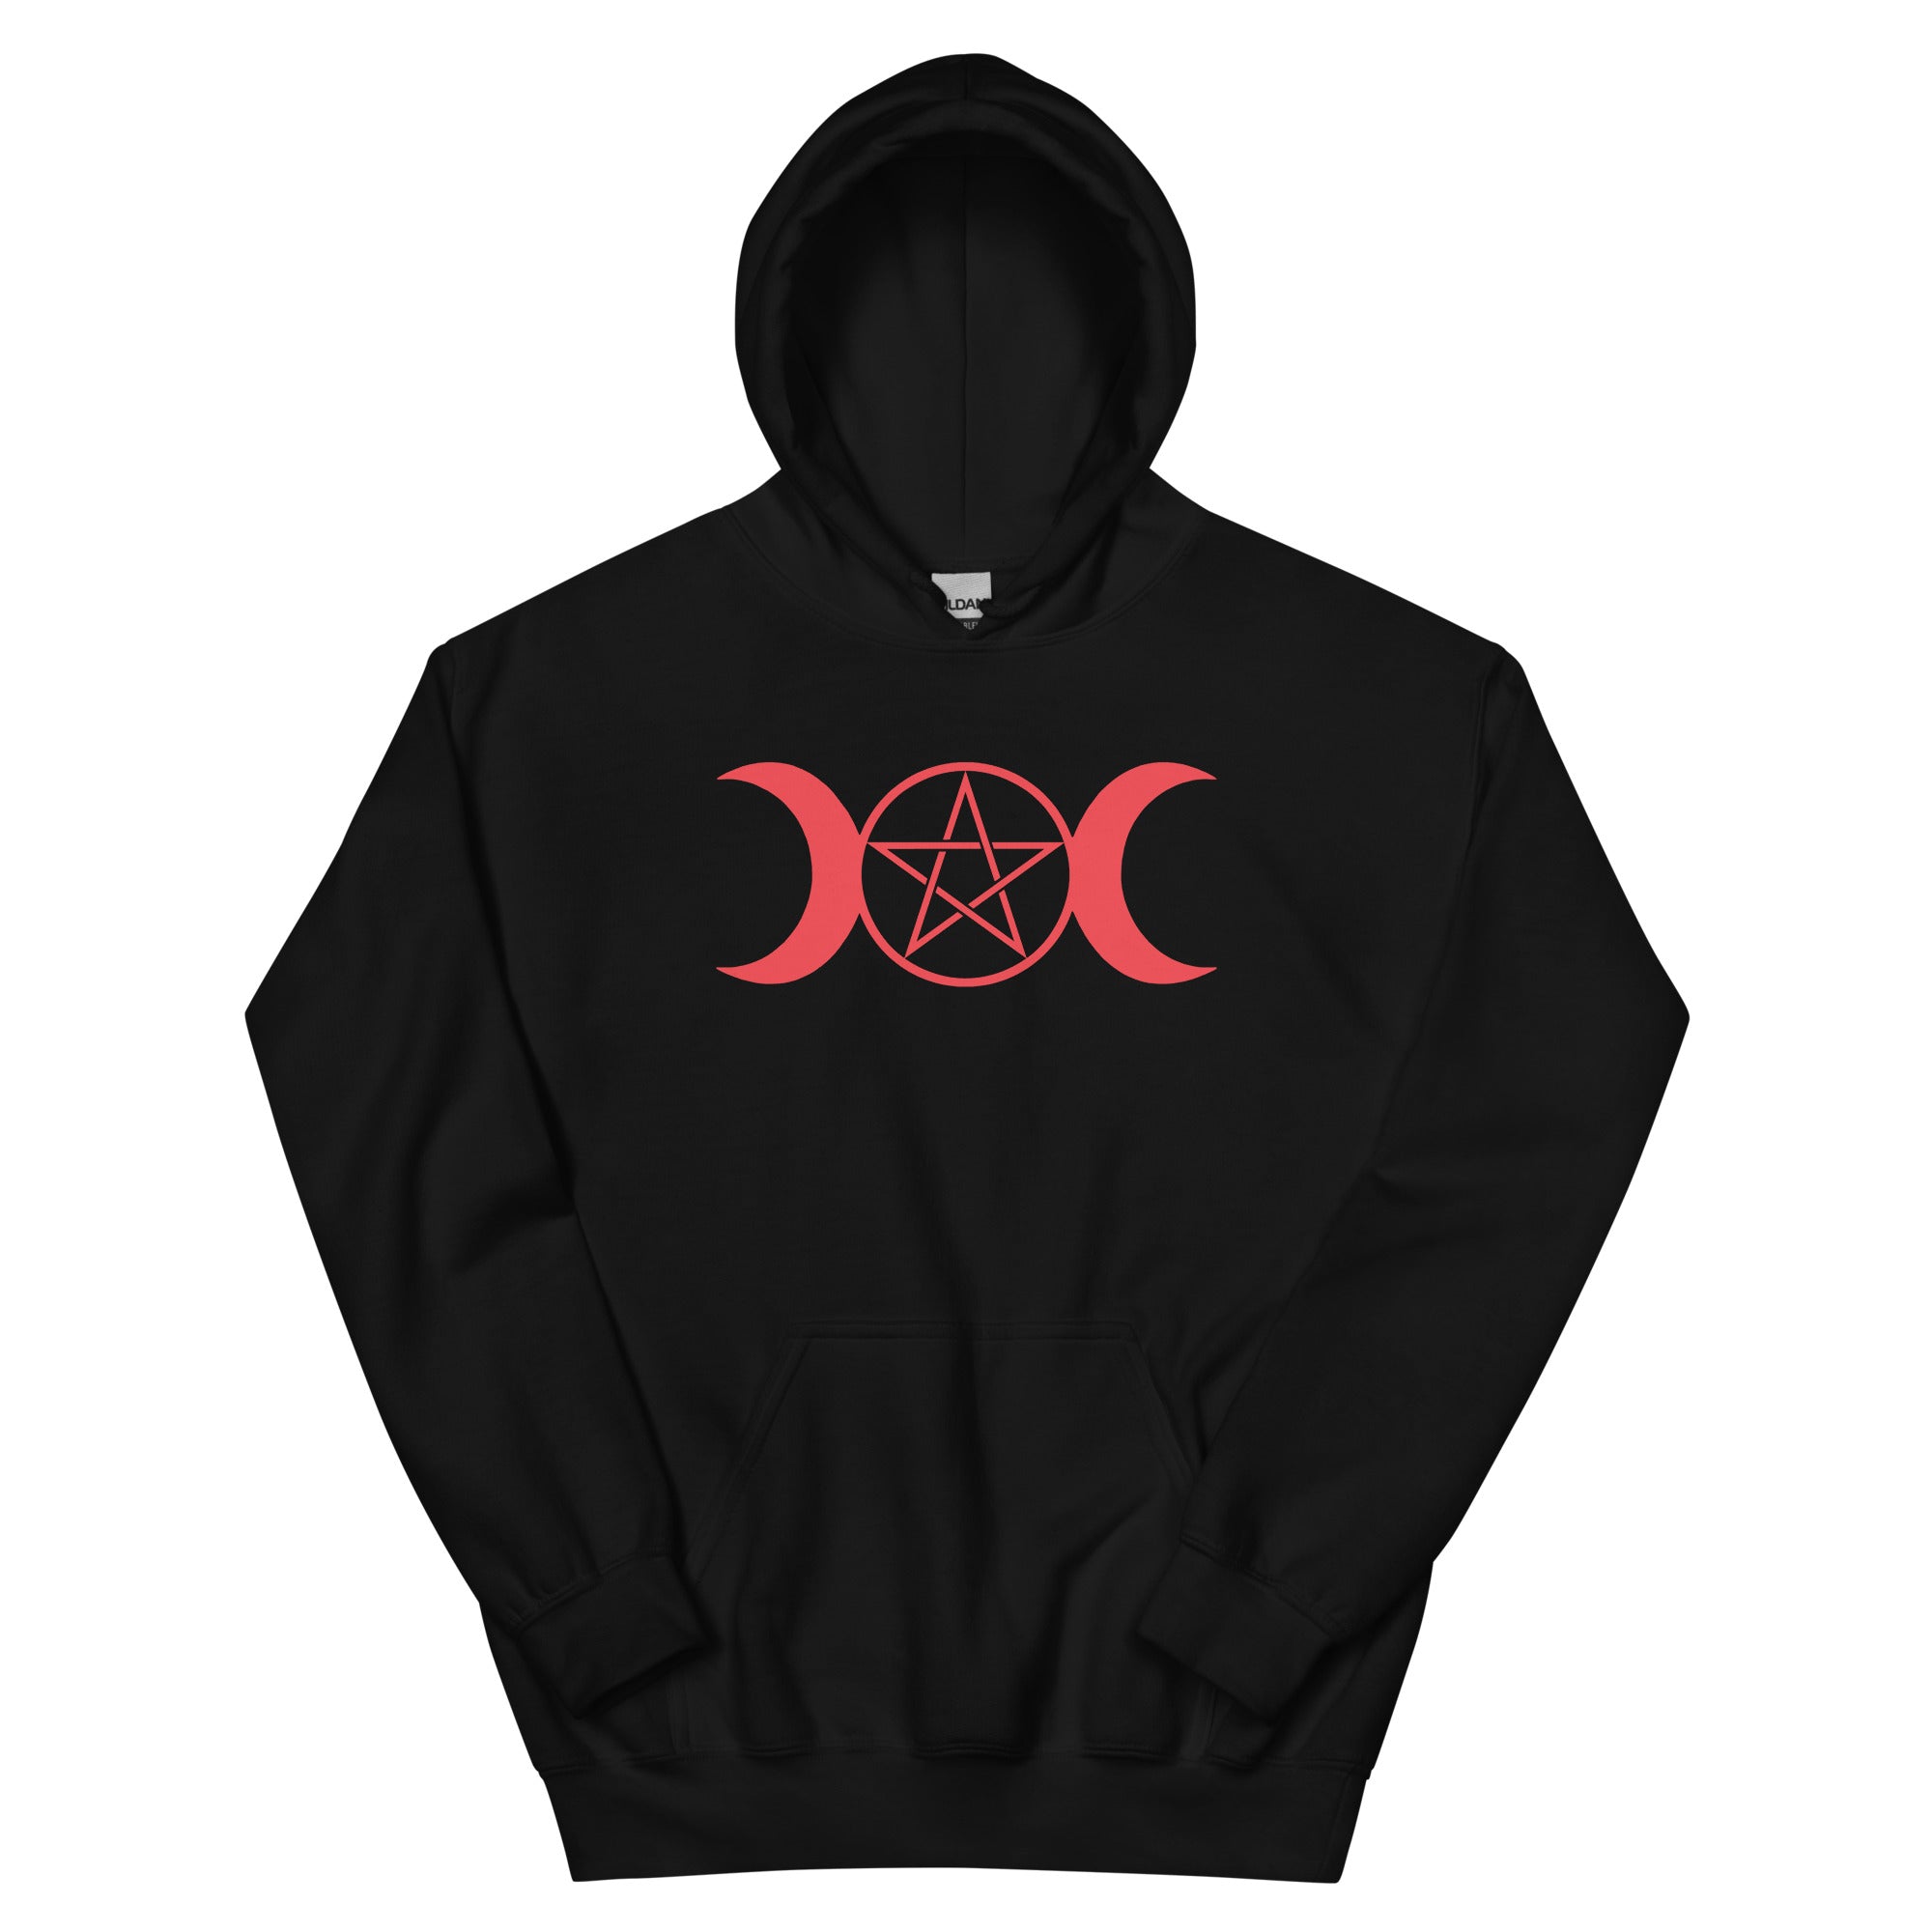 Red Triple Moon Goddess Wiccan Pagan Symbol Unisex Hoodie Sweatshirt - Edge of Life Designs